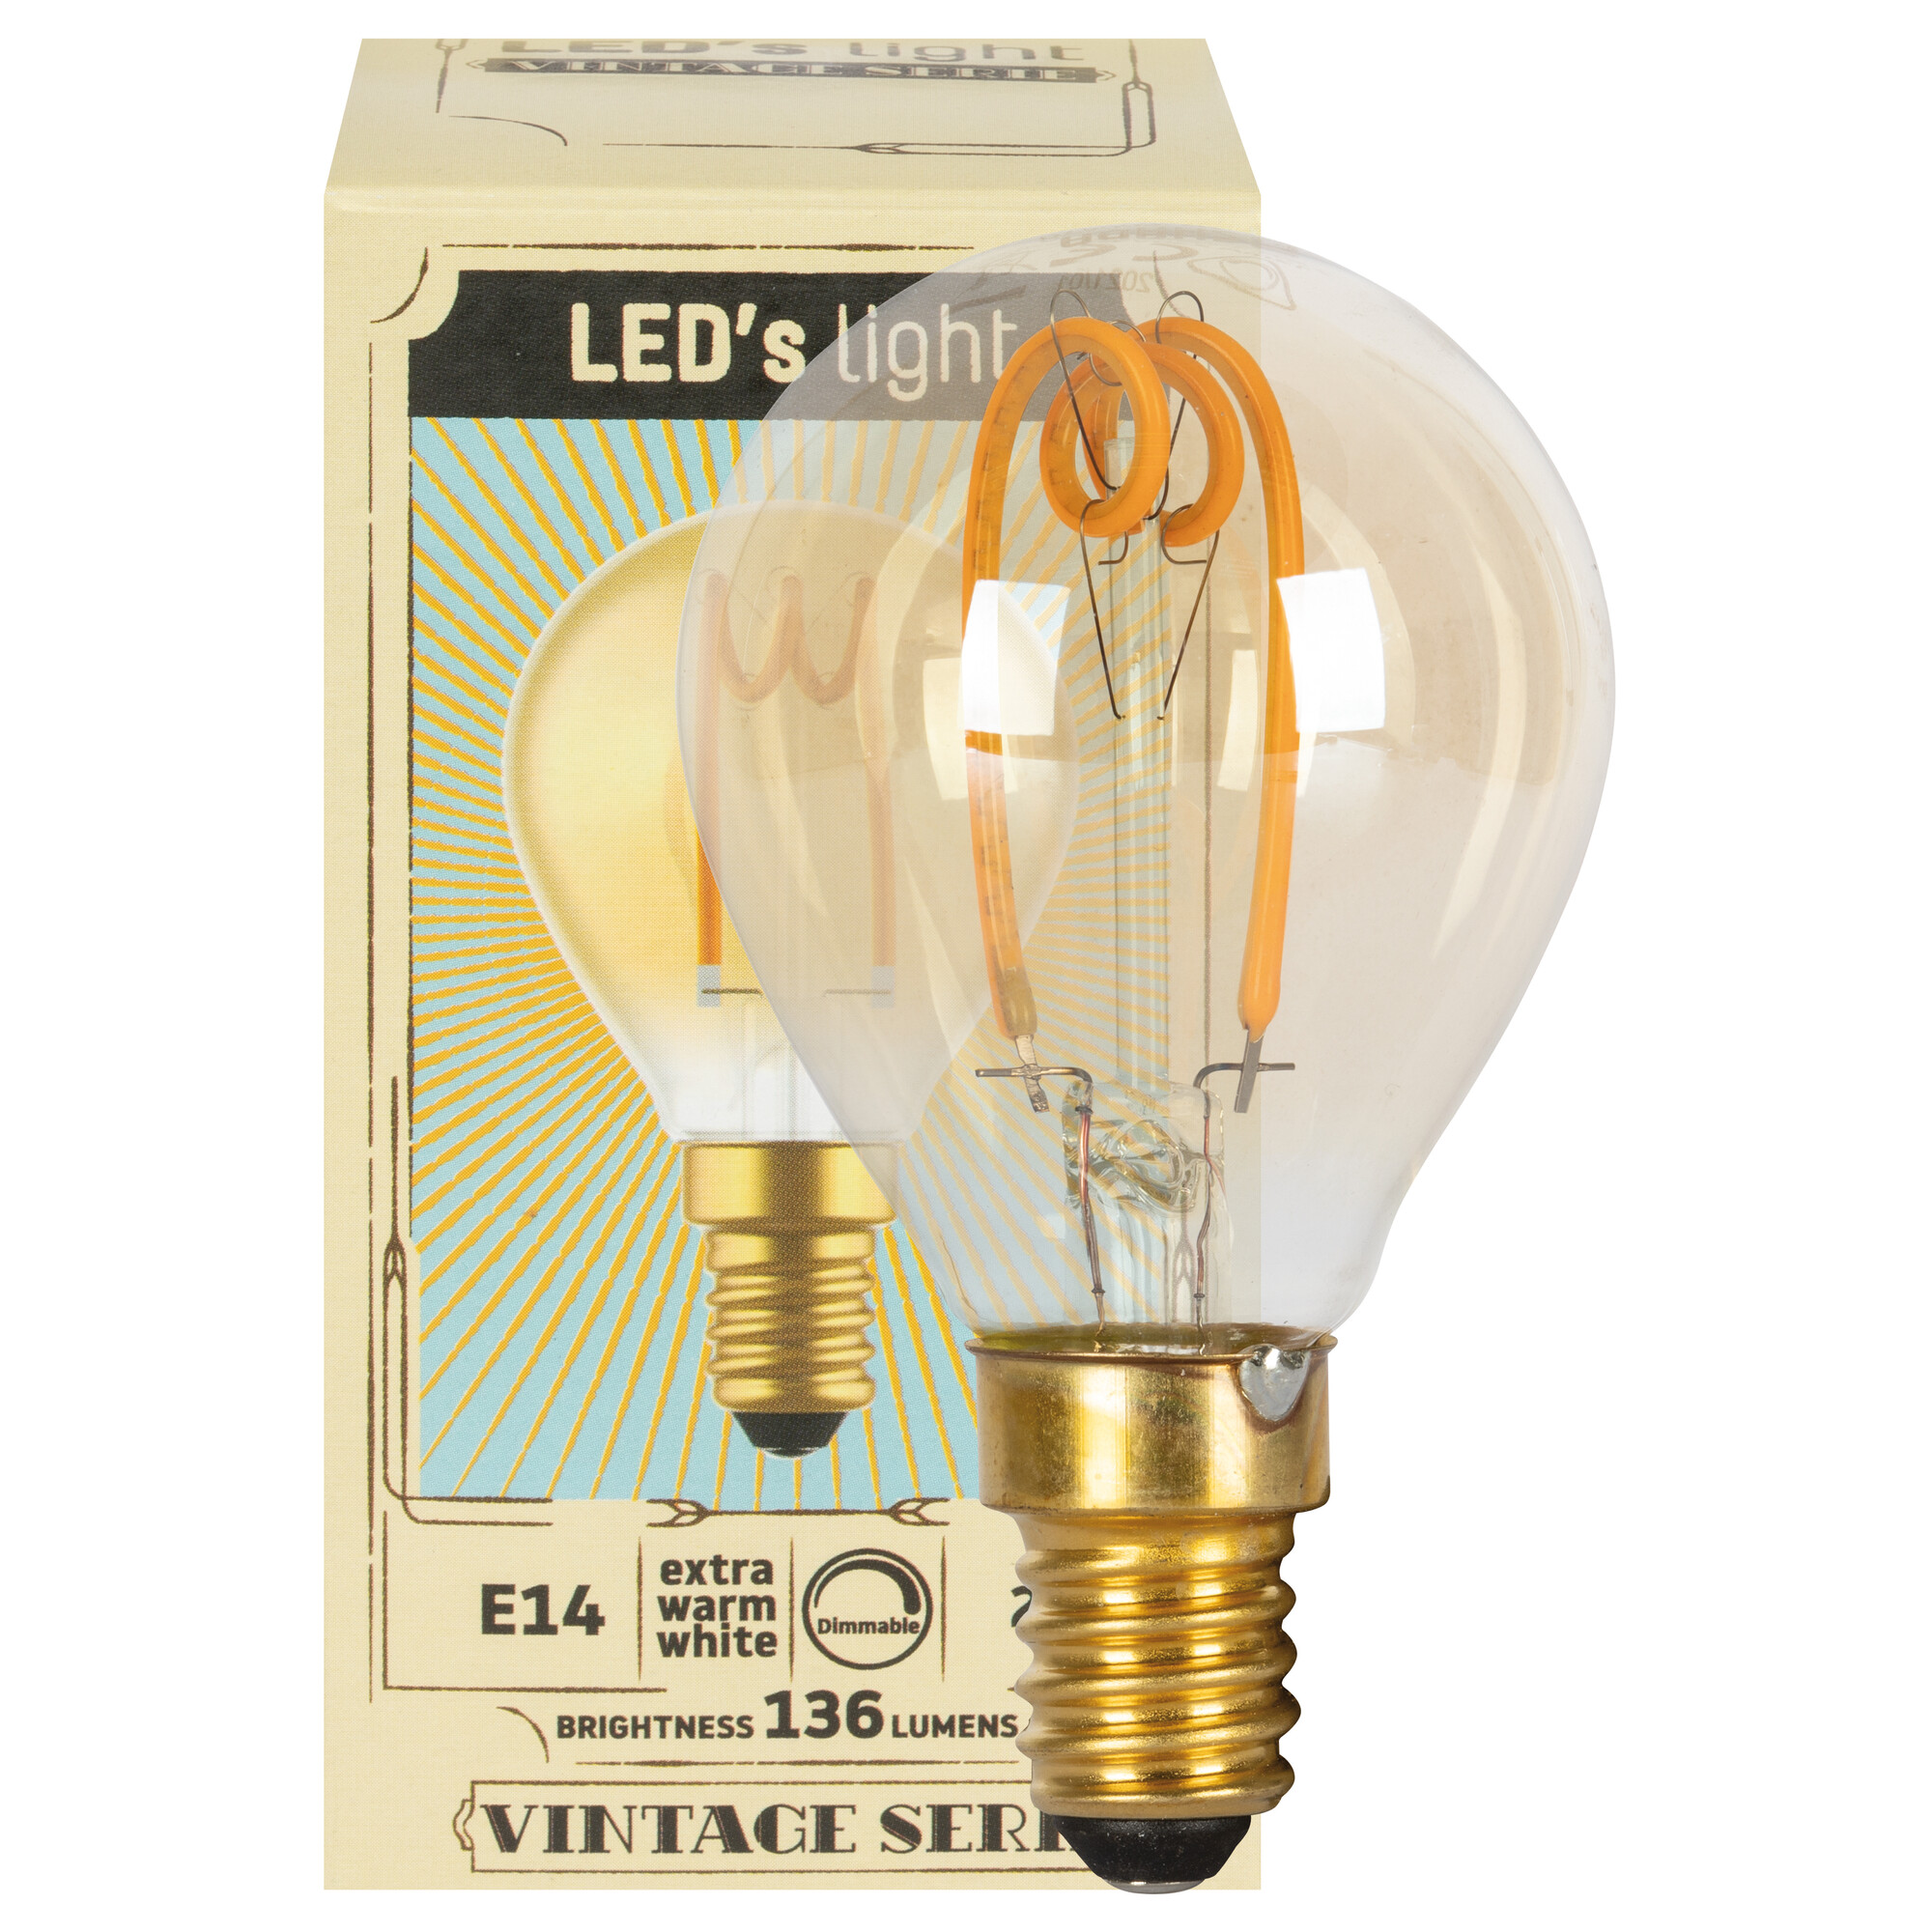 Spiral-LED-Lampe, Kerzen-Form, E14/2,5W, gold getönt, 136 lm, L 97, Ø 35 -  LED-Sonderform- & Deko-Lampen Leuchtmittel - Max Pferdekaemper GmbH & Co. KG